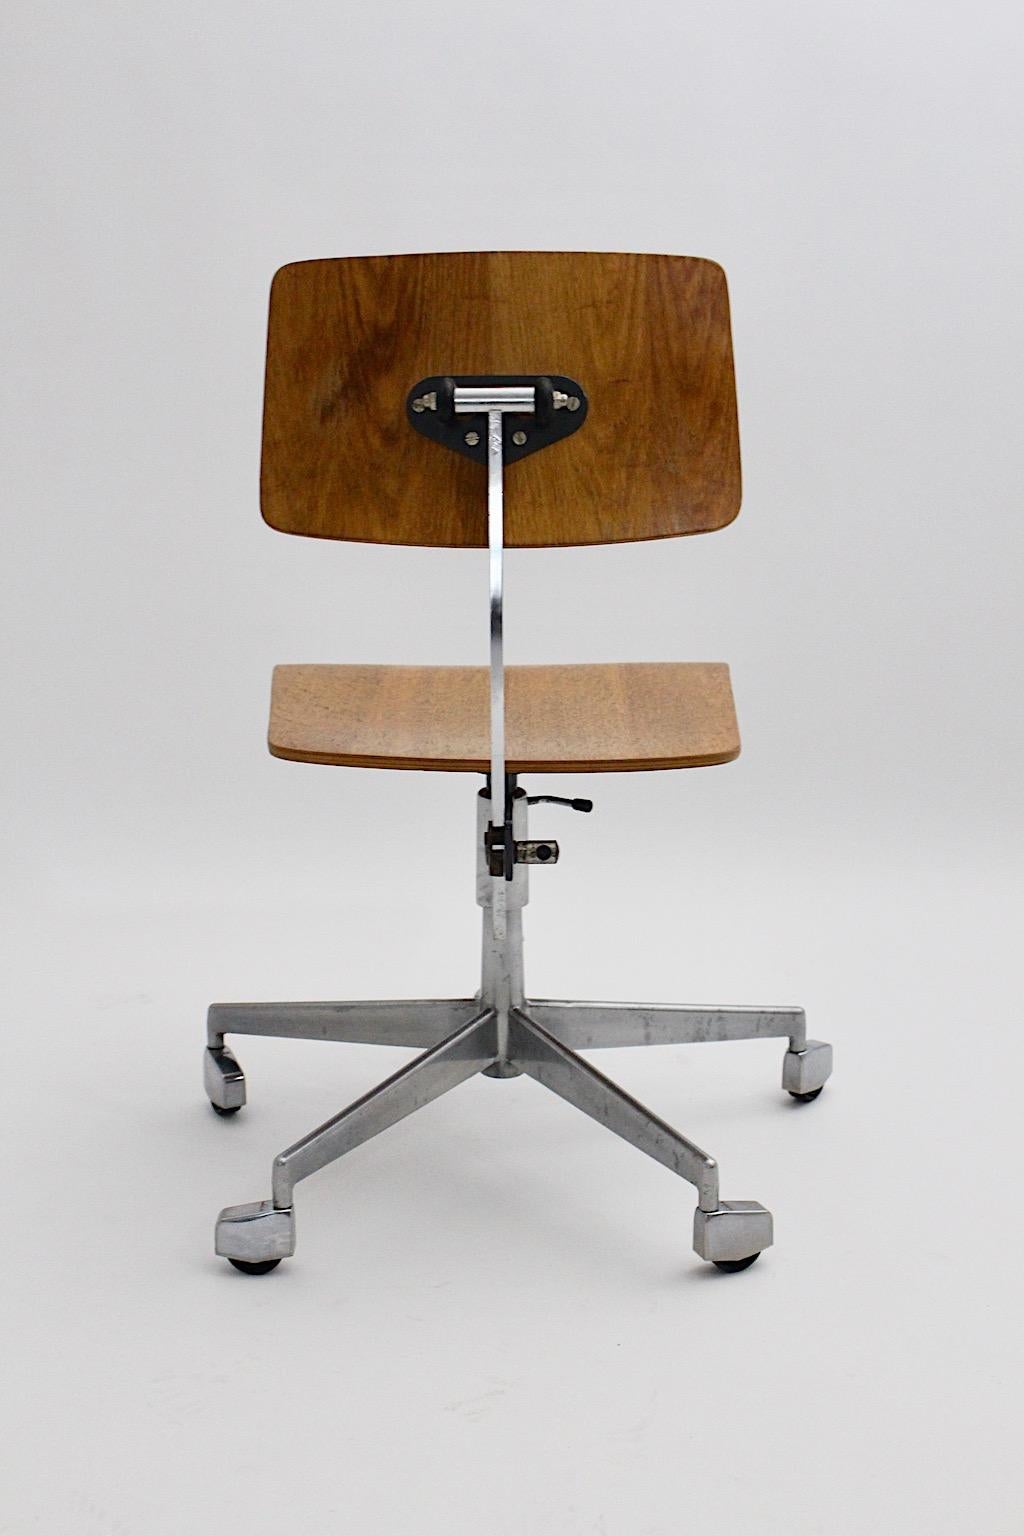 20th Century Scandinavian Modern Vintage Desk Chair Office Chair Labofa 1950 Denmark For Sale